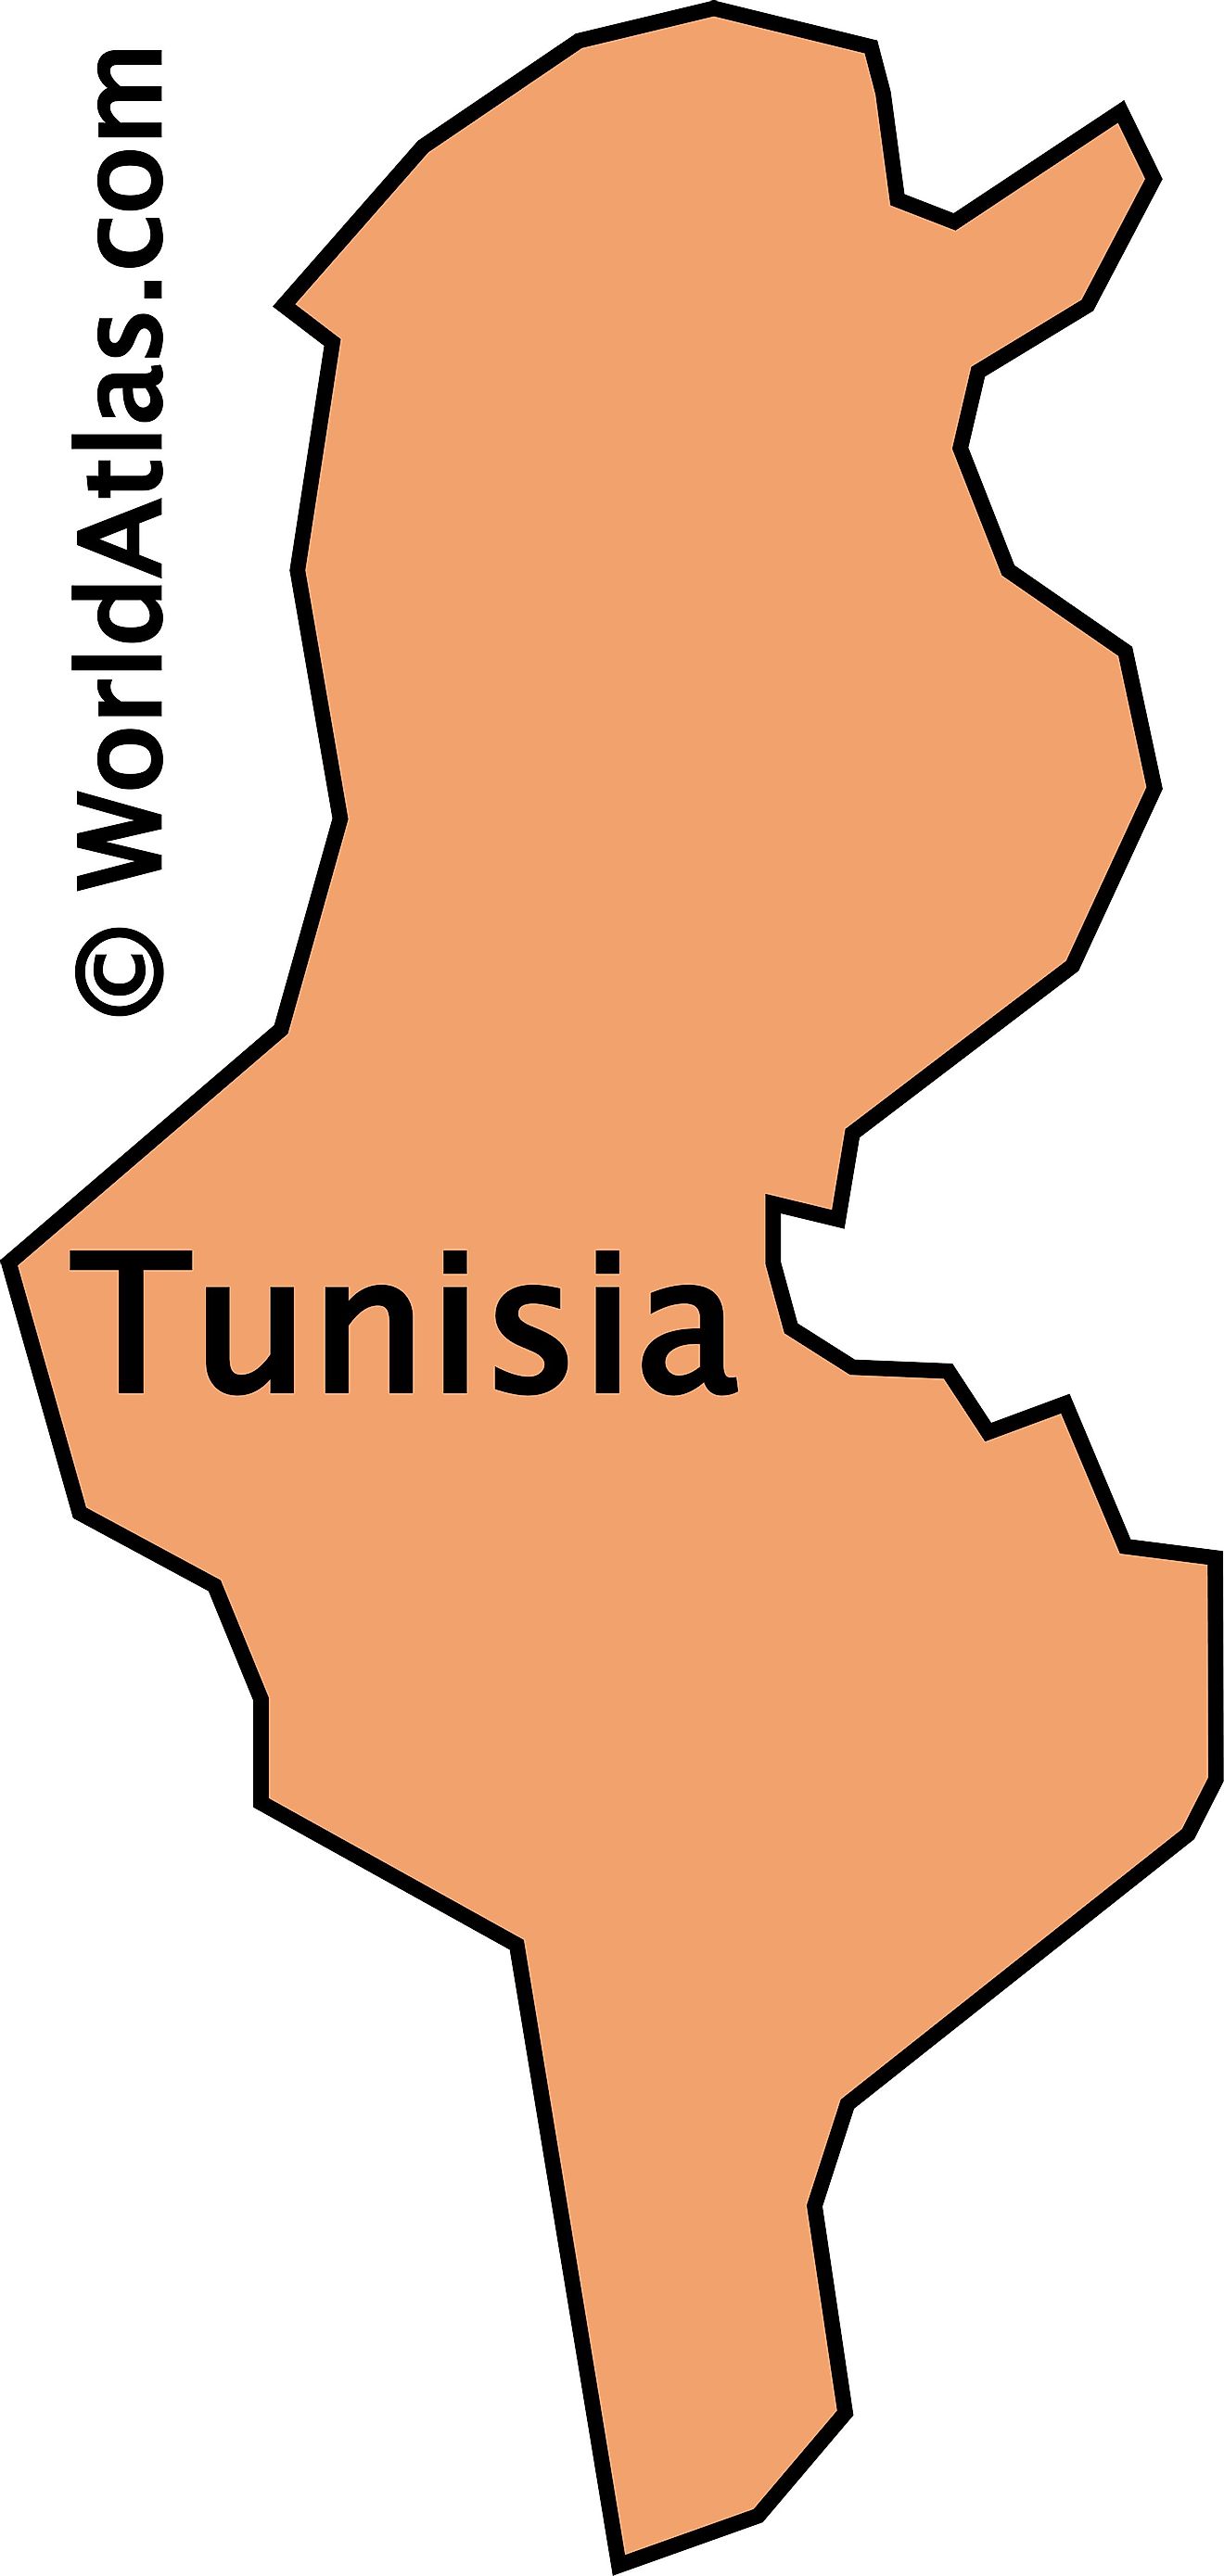 Mapa de contorno de Túnez